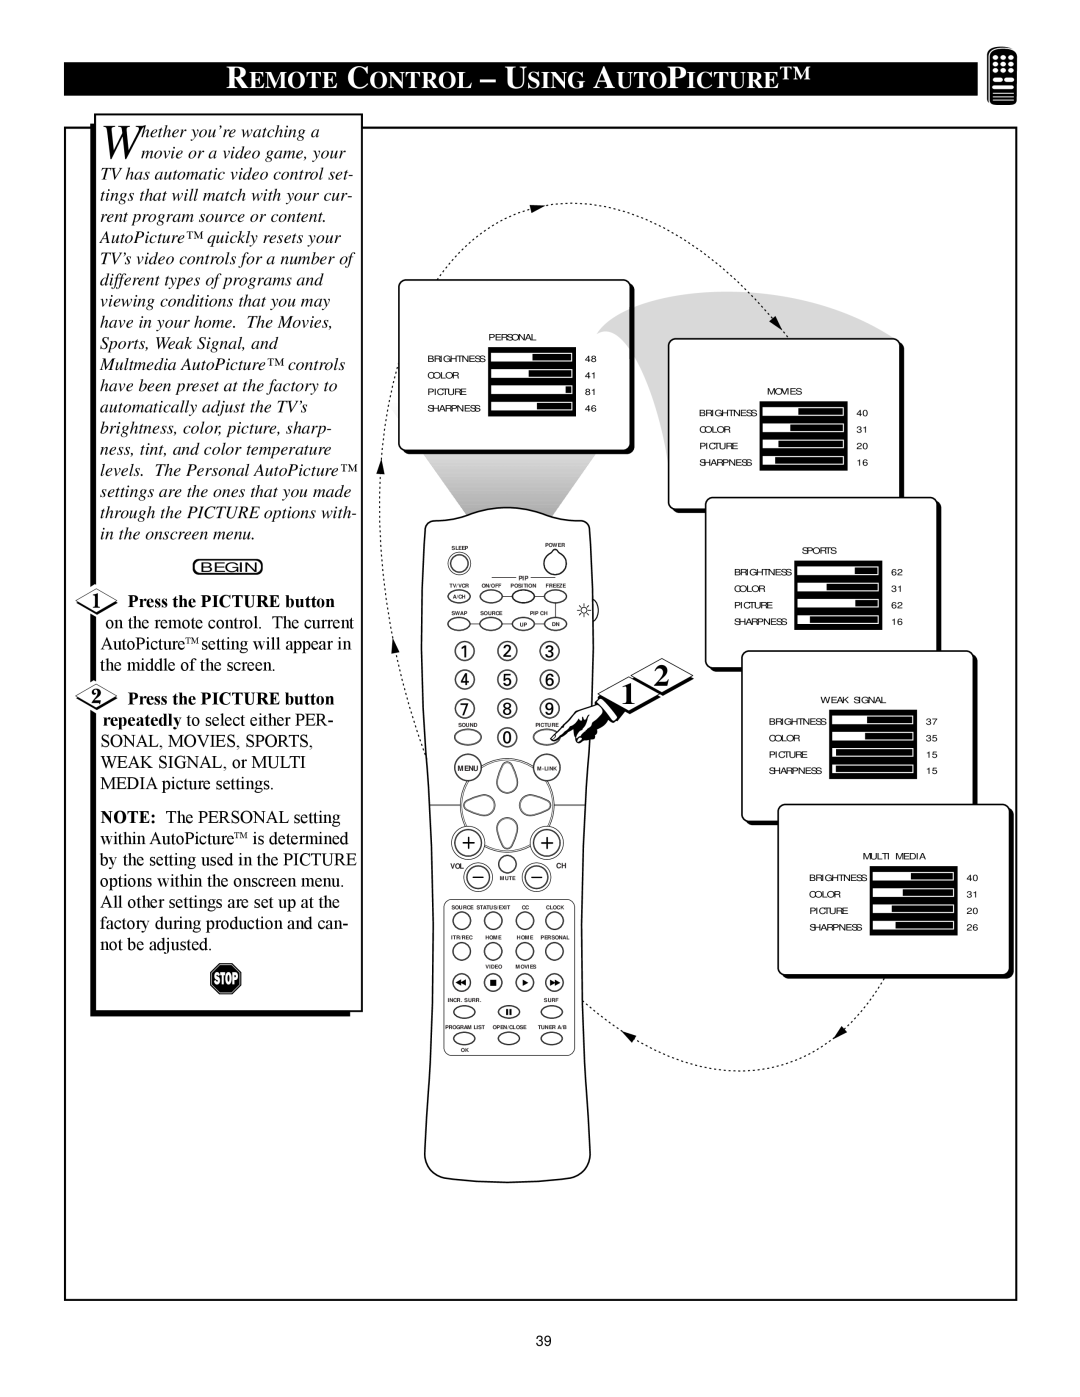 Philips 32PT81S1 manual Remote Control - Using Autopicture, Press the PICTURE button 